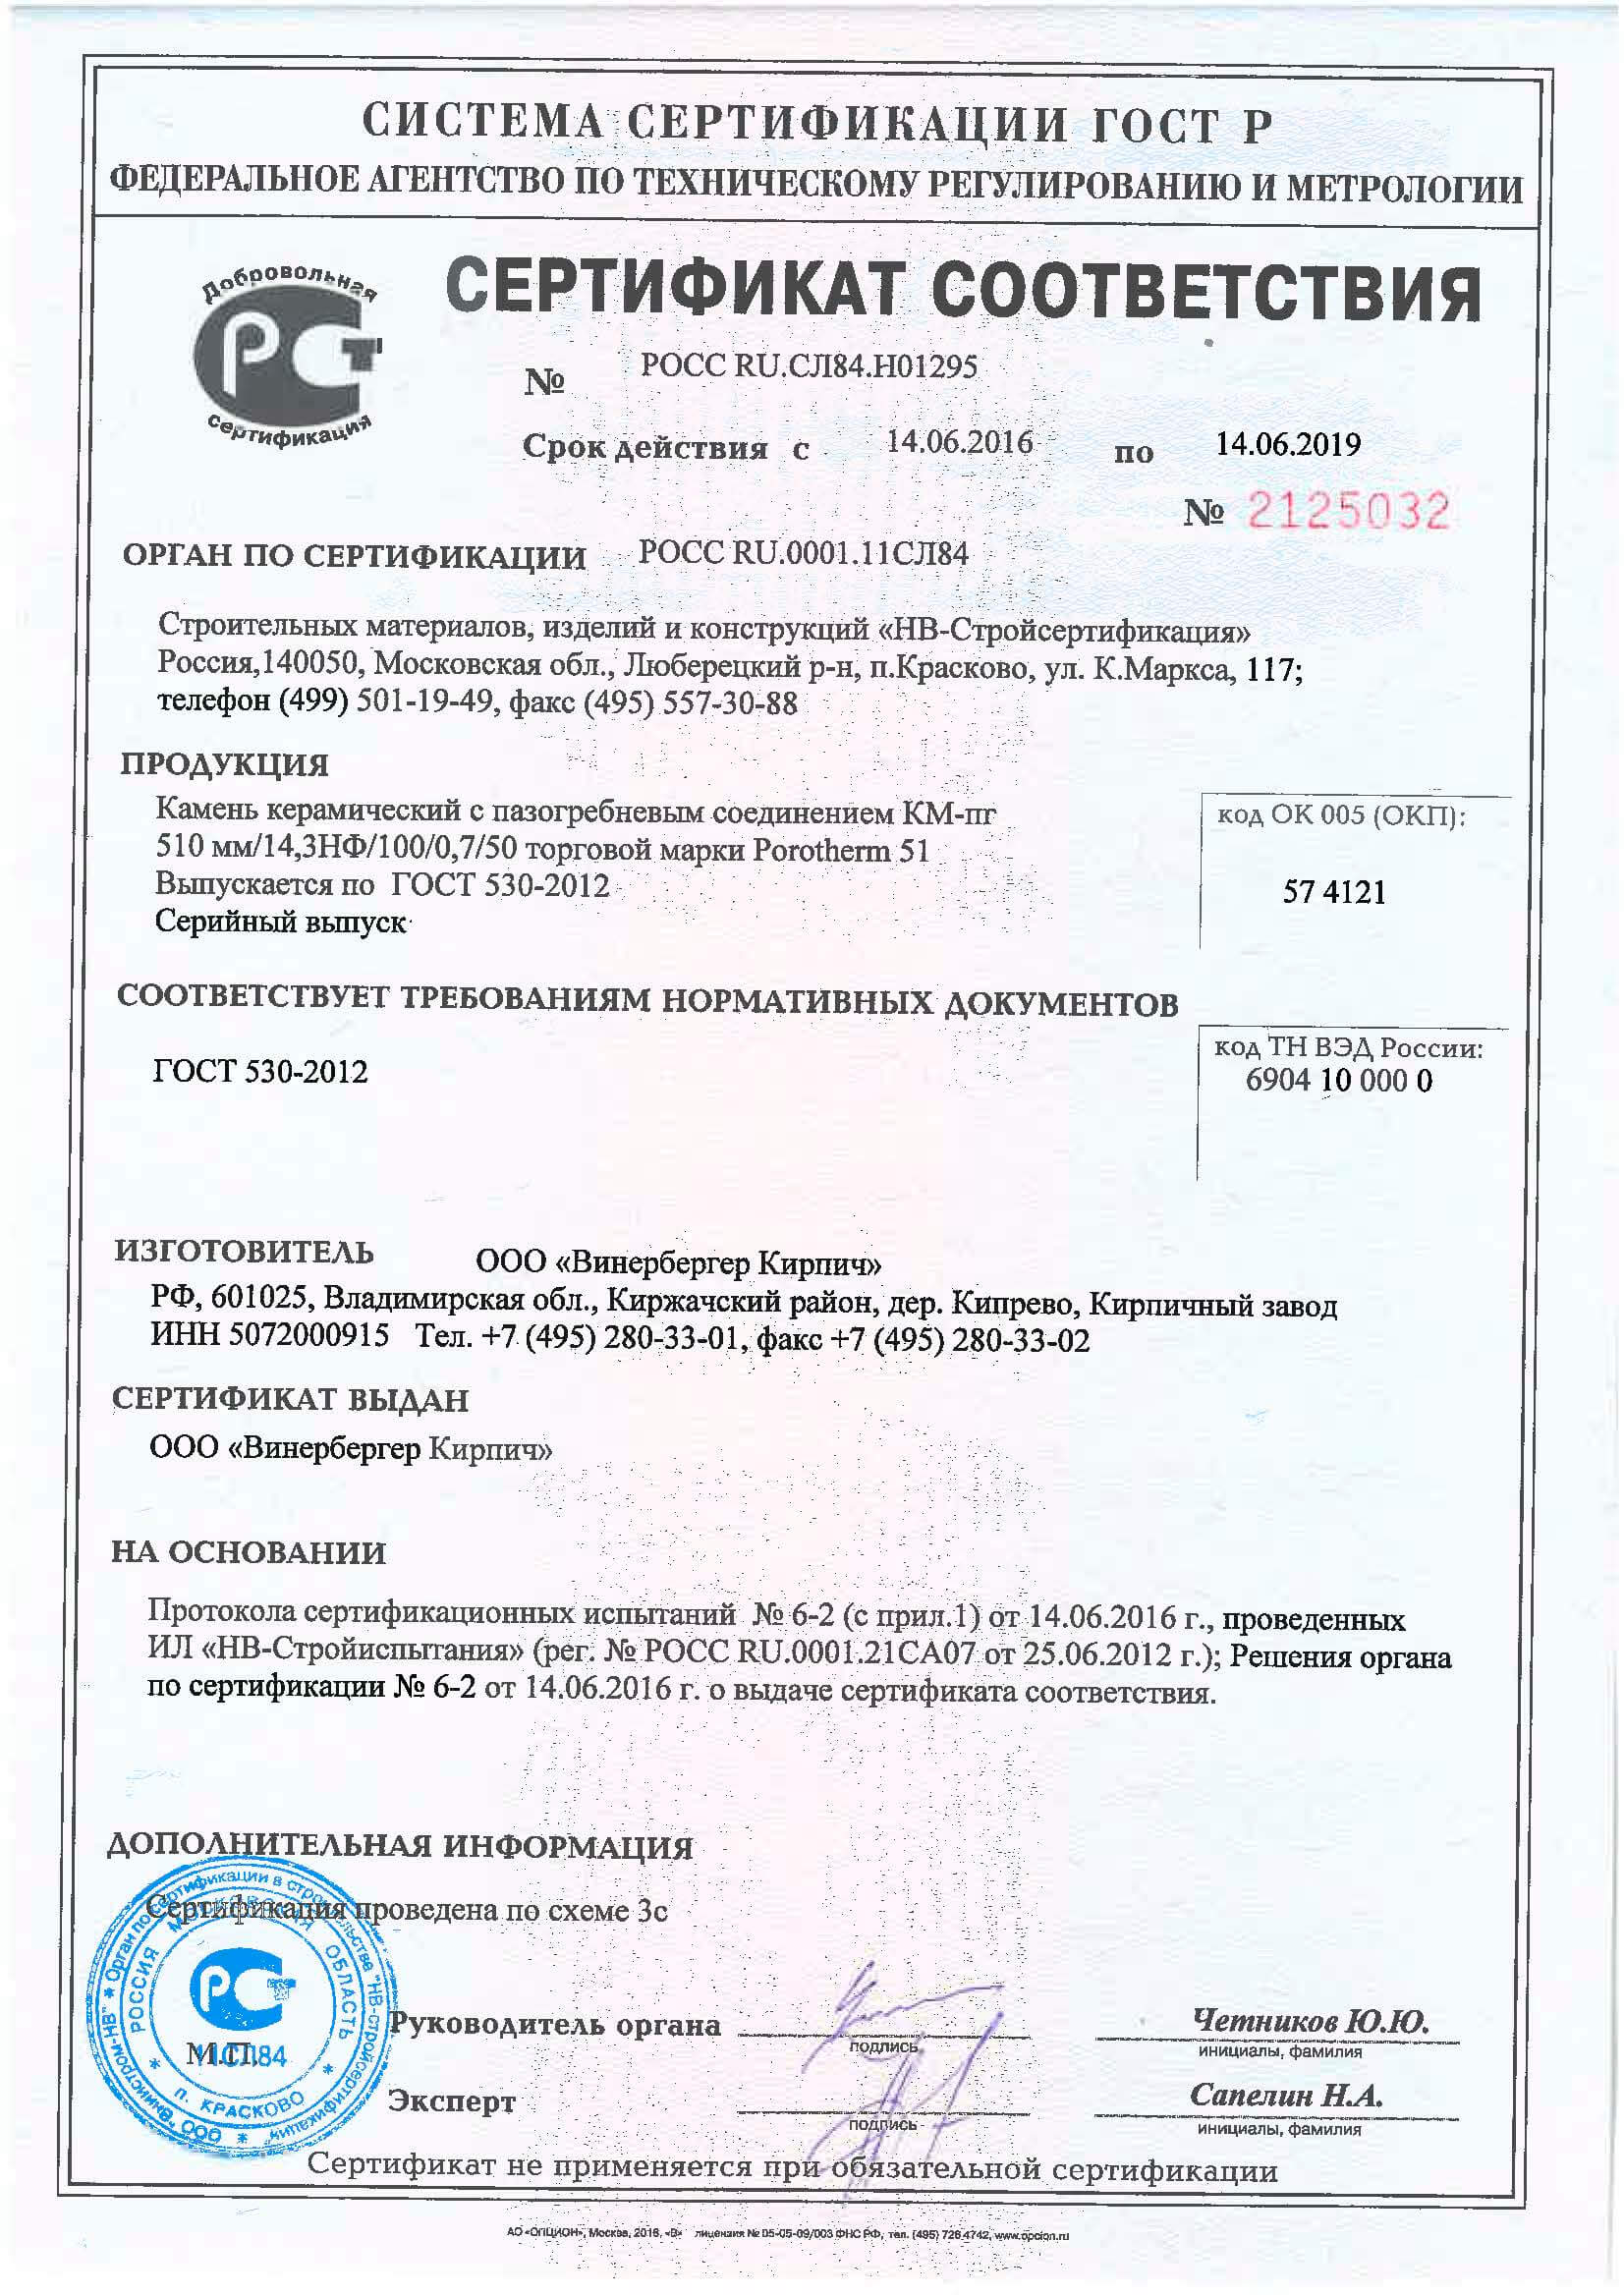 Сертификат соответствия ГОСТ 530-2012 на Porotherm 38 Thermo